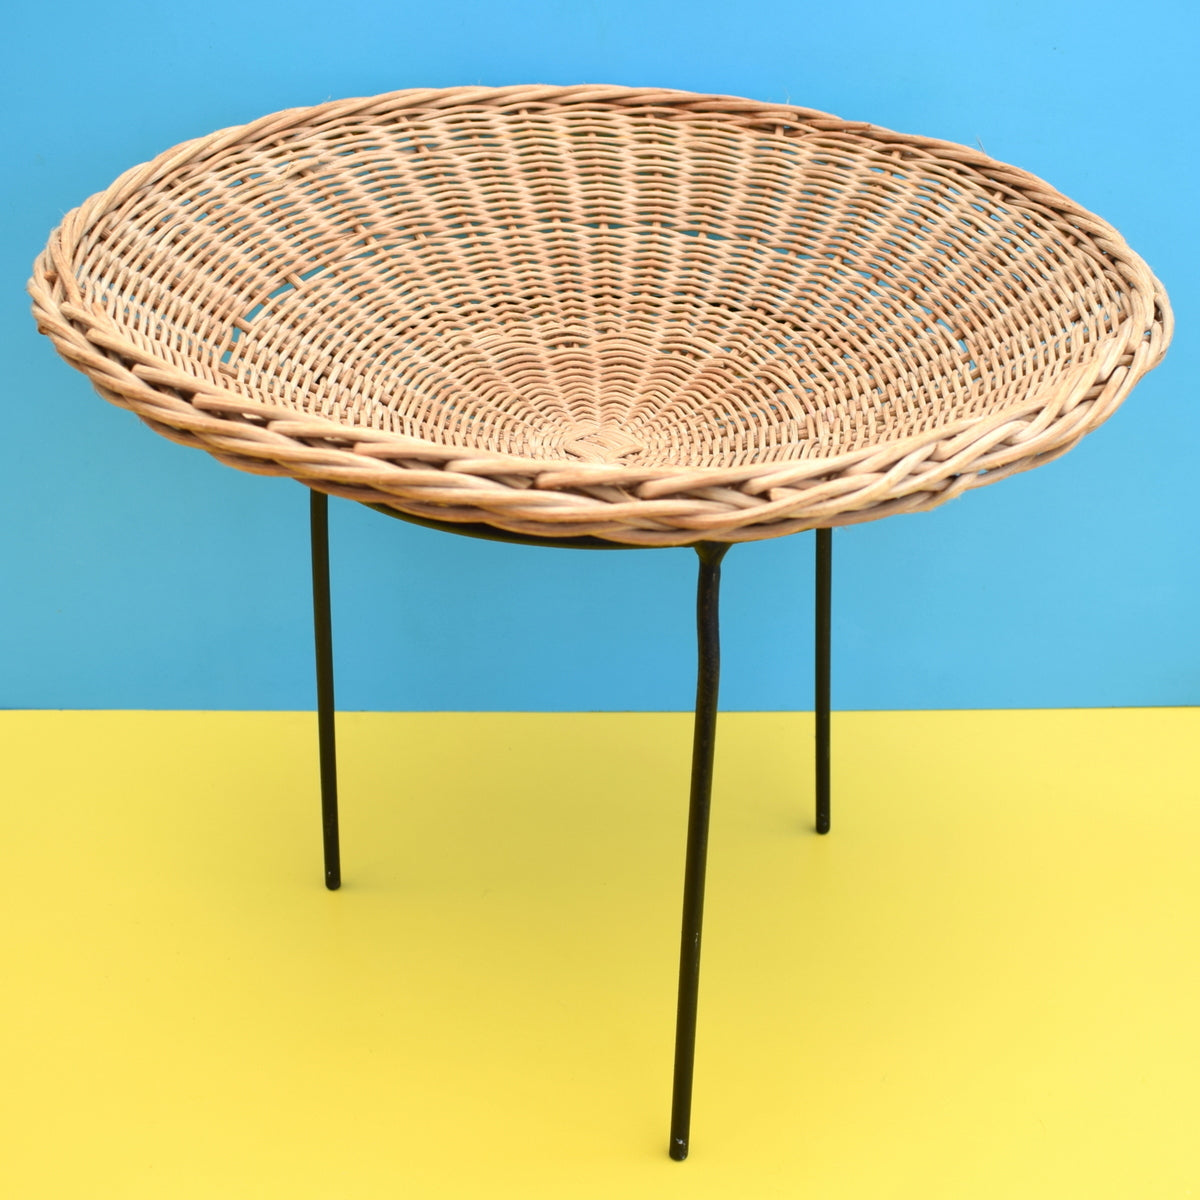 Vintage 1950s Atomic Wool Basket / Plant Stand - Wicker & Black